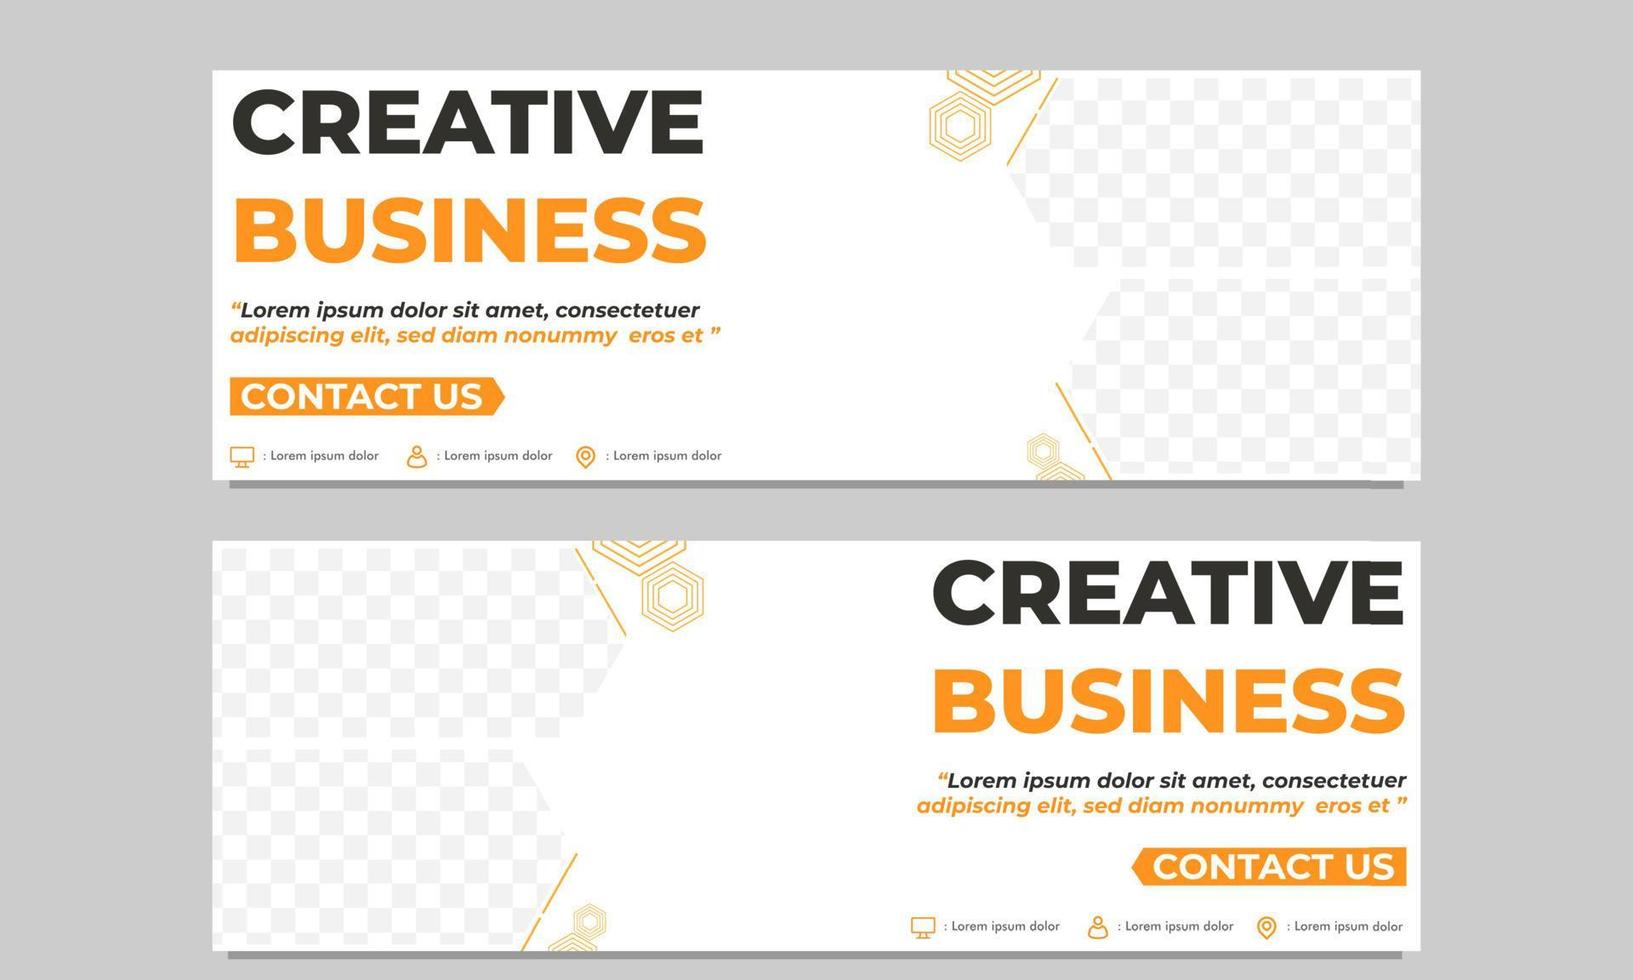 creative business horizontal banner template vector